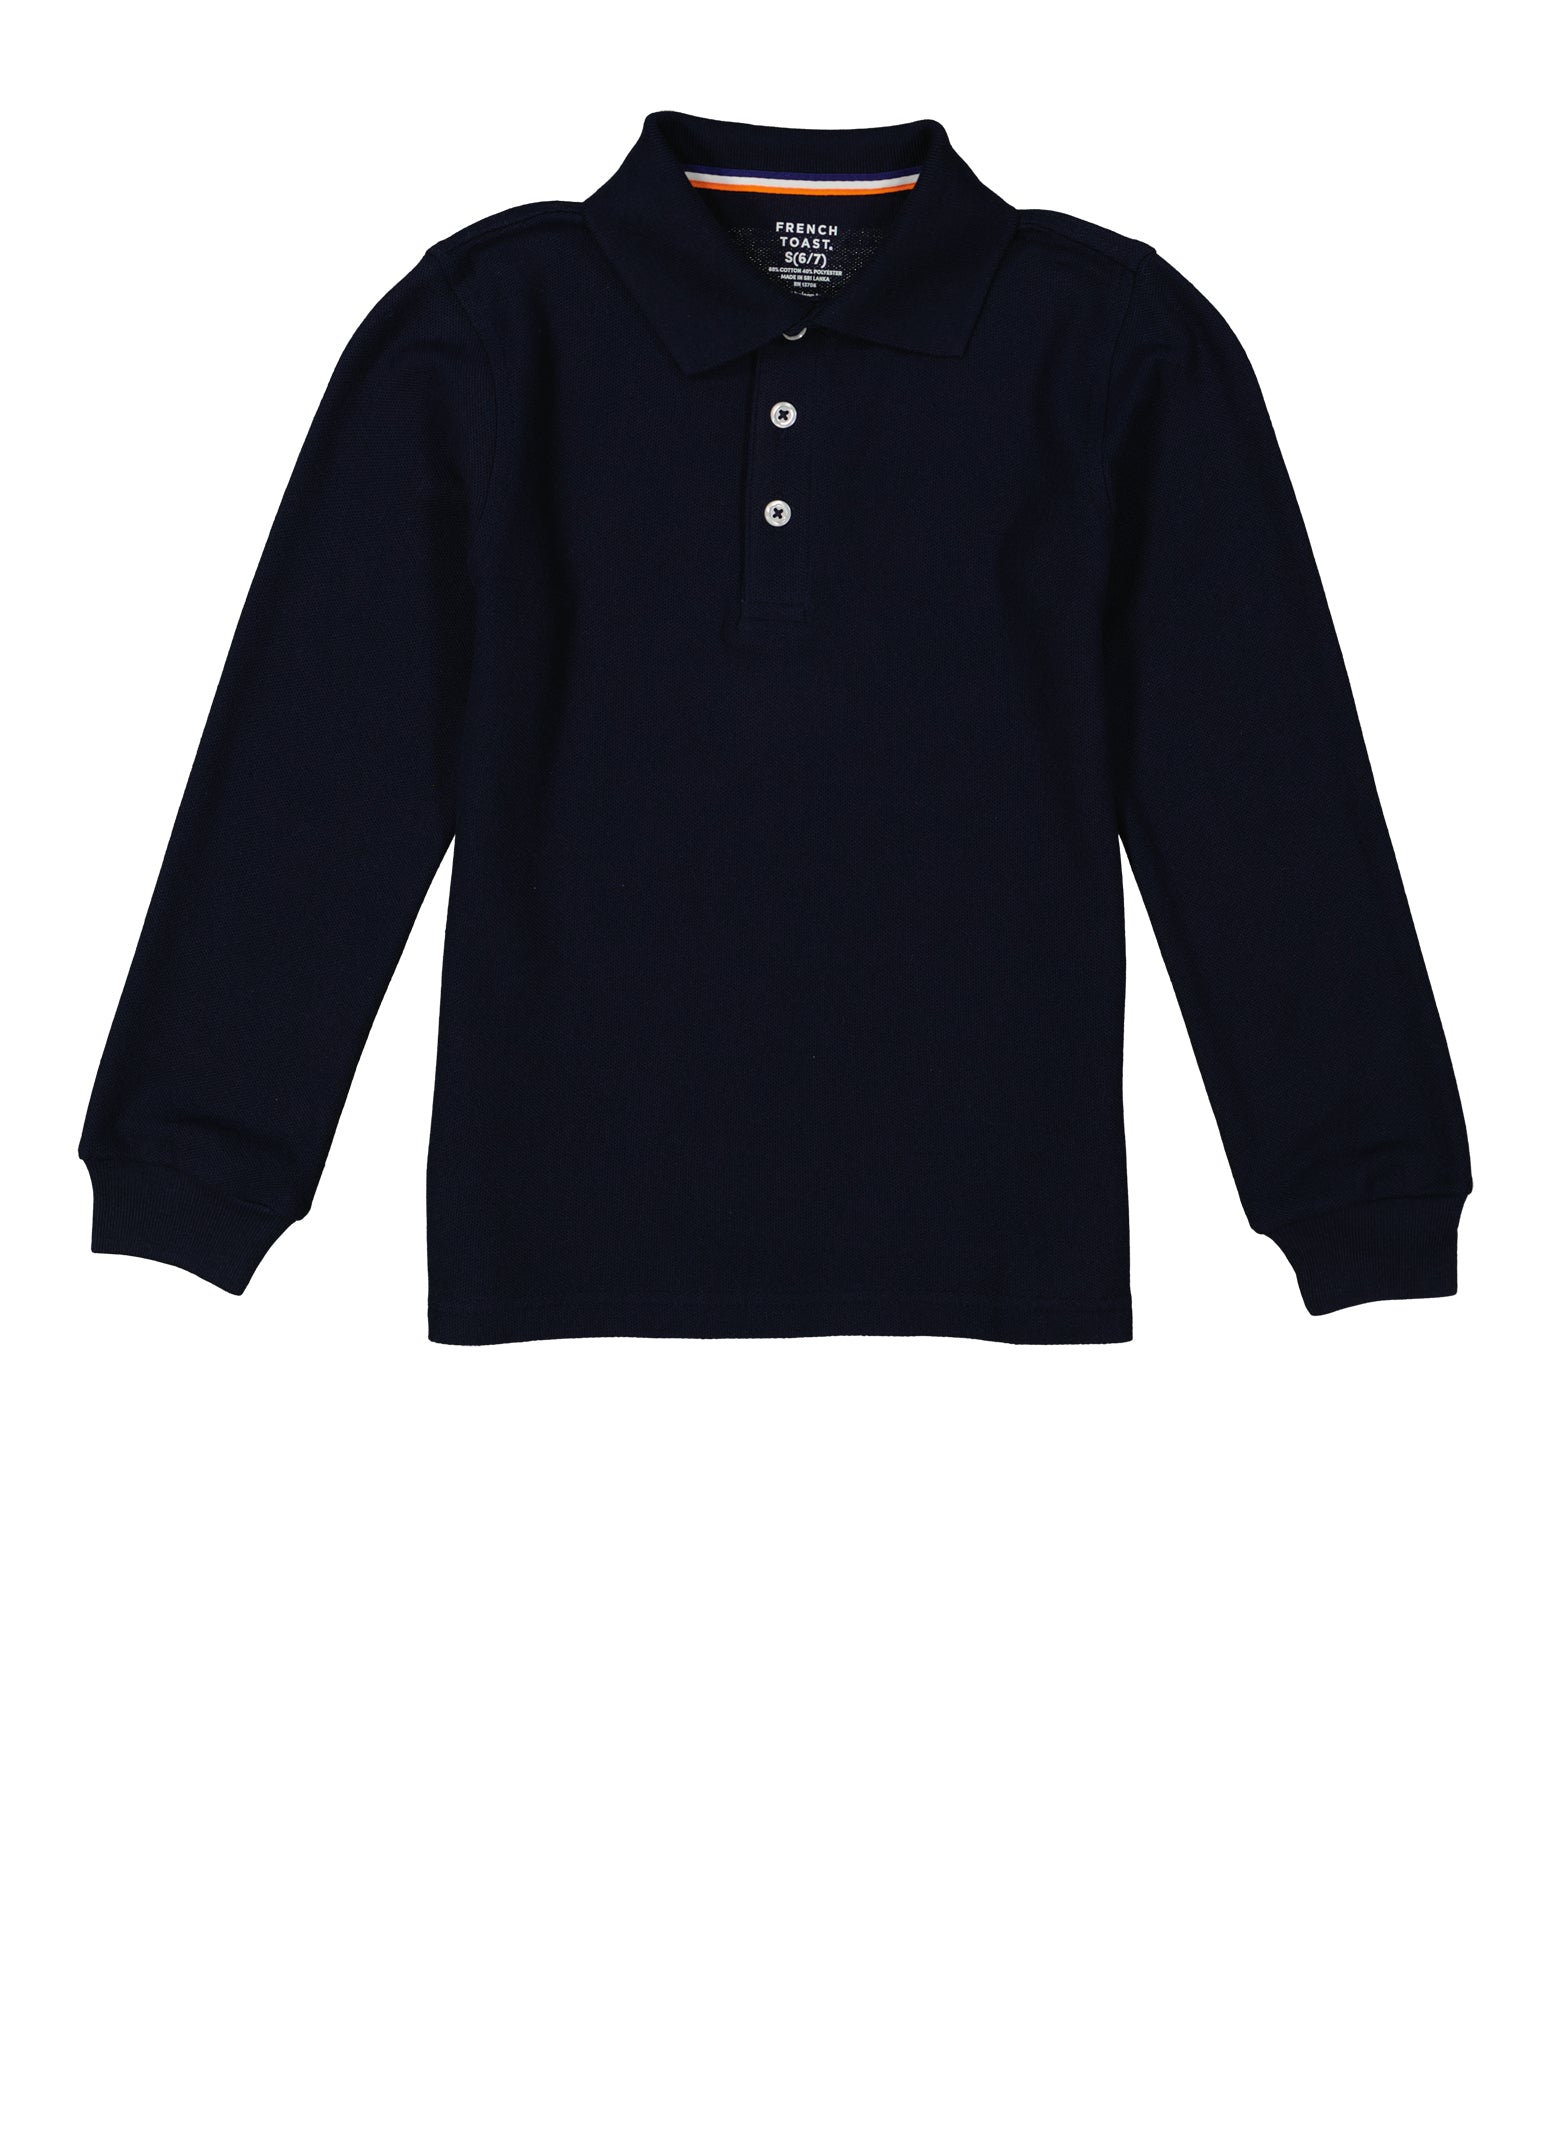 French Toast Boys 4-7 Long Sleeve Pique Polo Shirt, Blue, Size 4-5